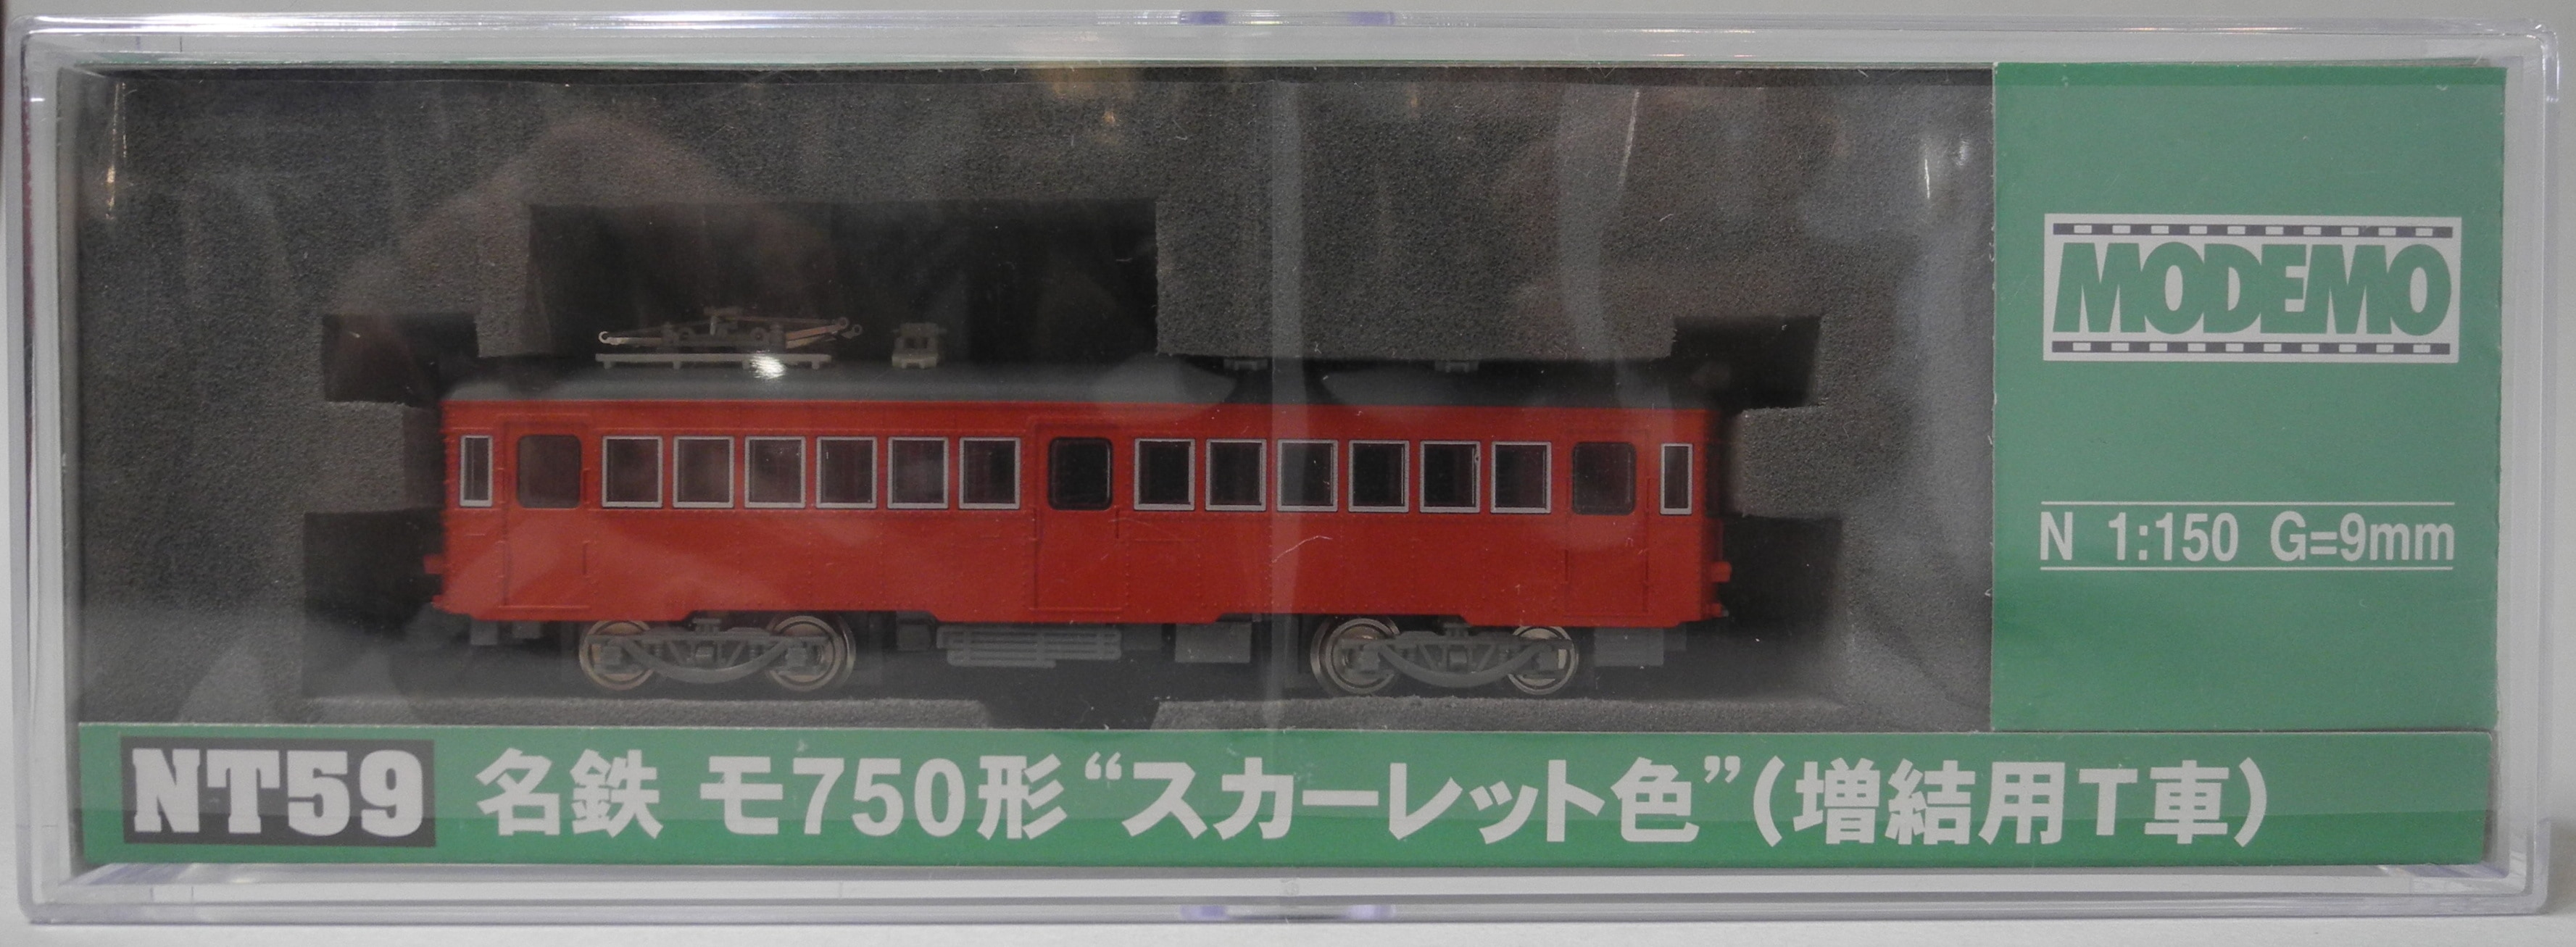 Nゲージ MODEMO(モデモ) NT59 名鉄モ750” スカーレット色” (T車)